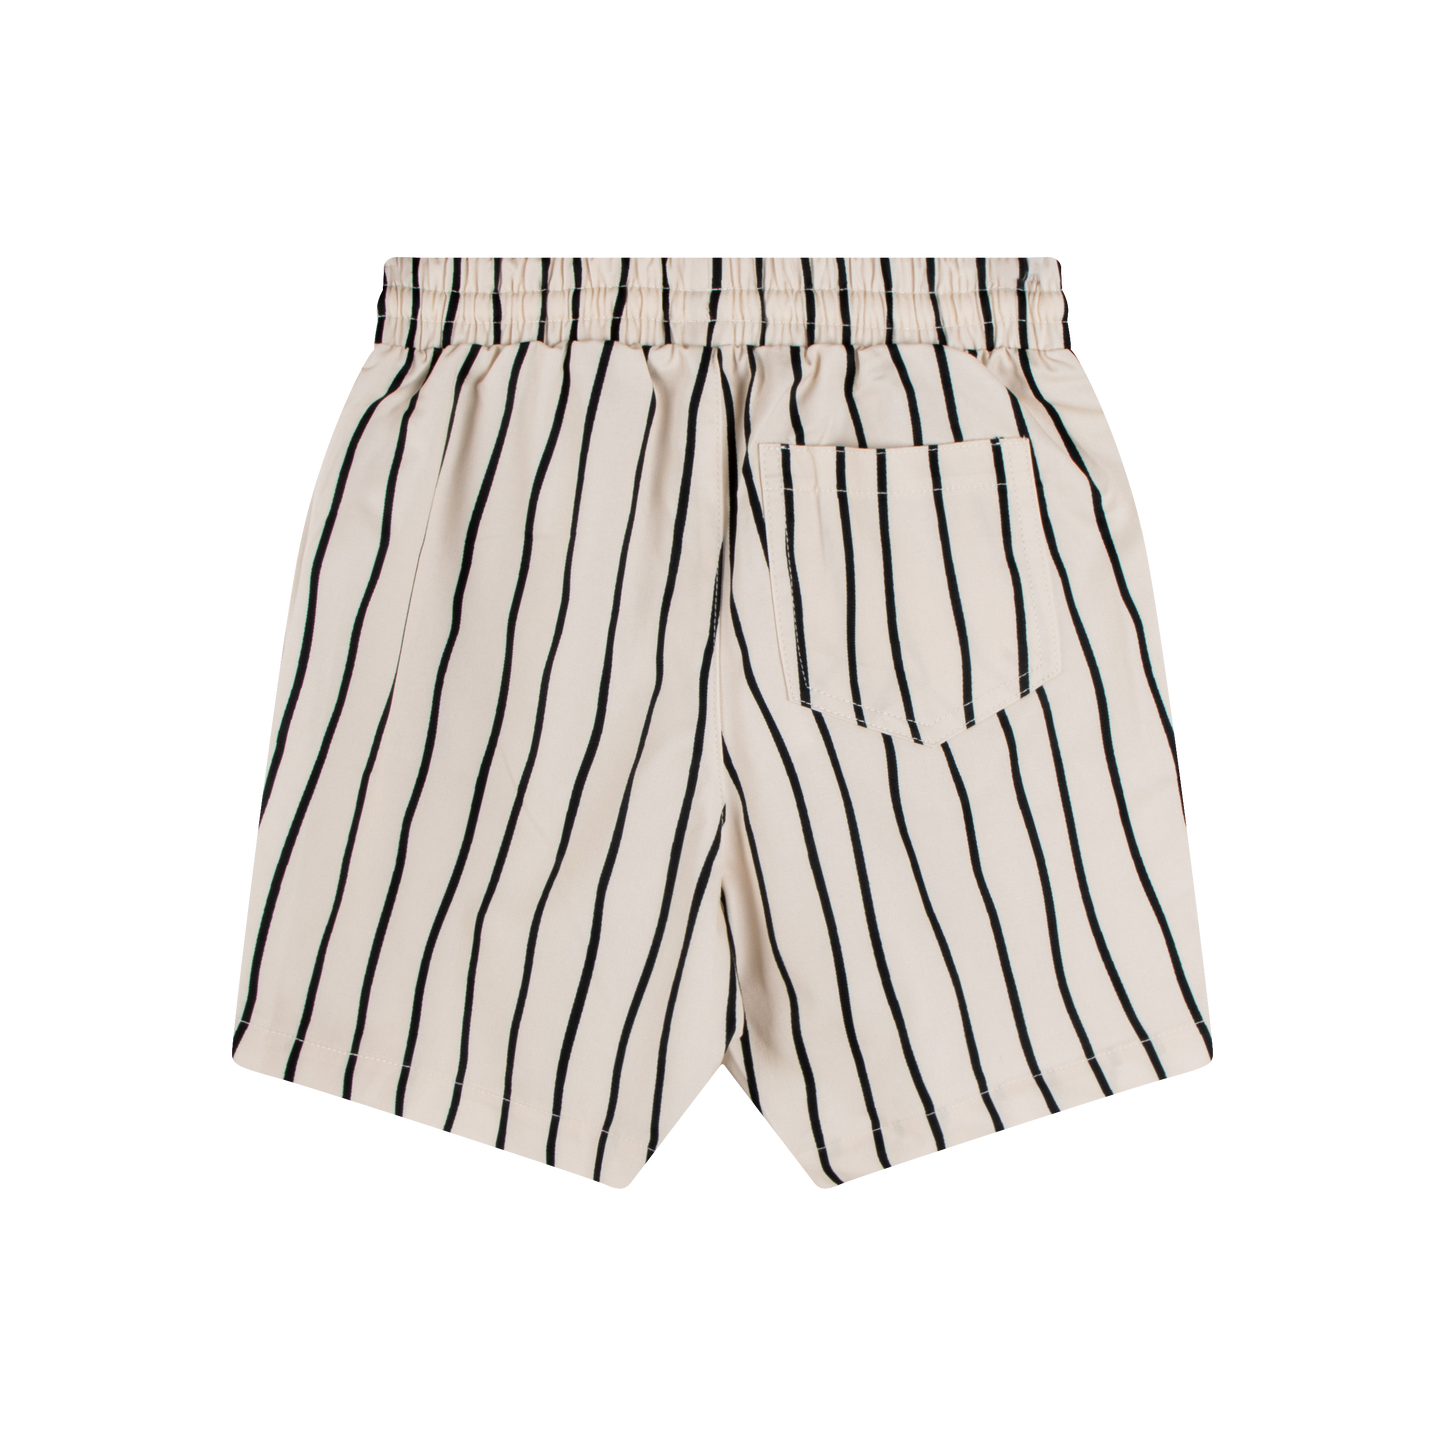 iMiN Kids Boys Knee Length Cotton Shorts Vertical Striped